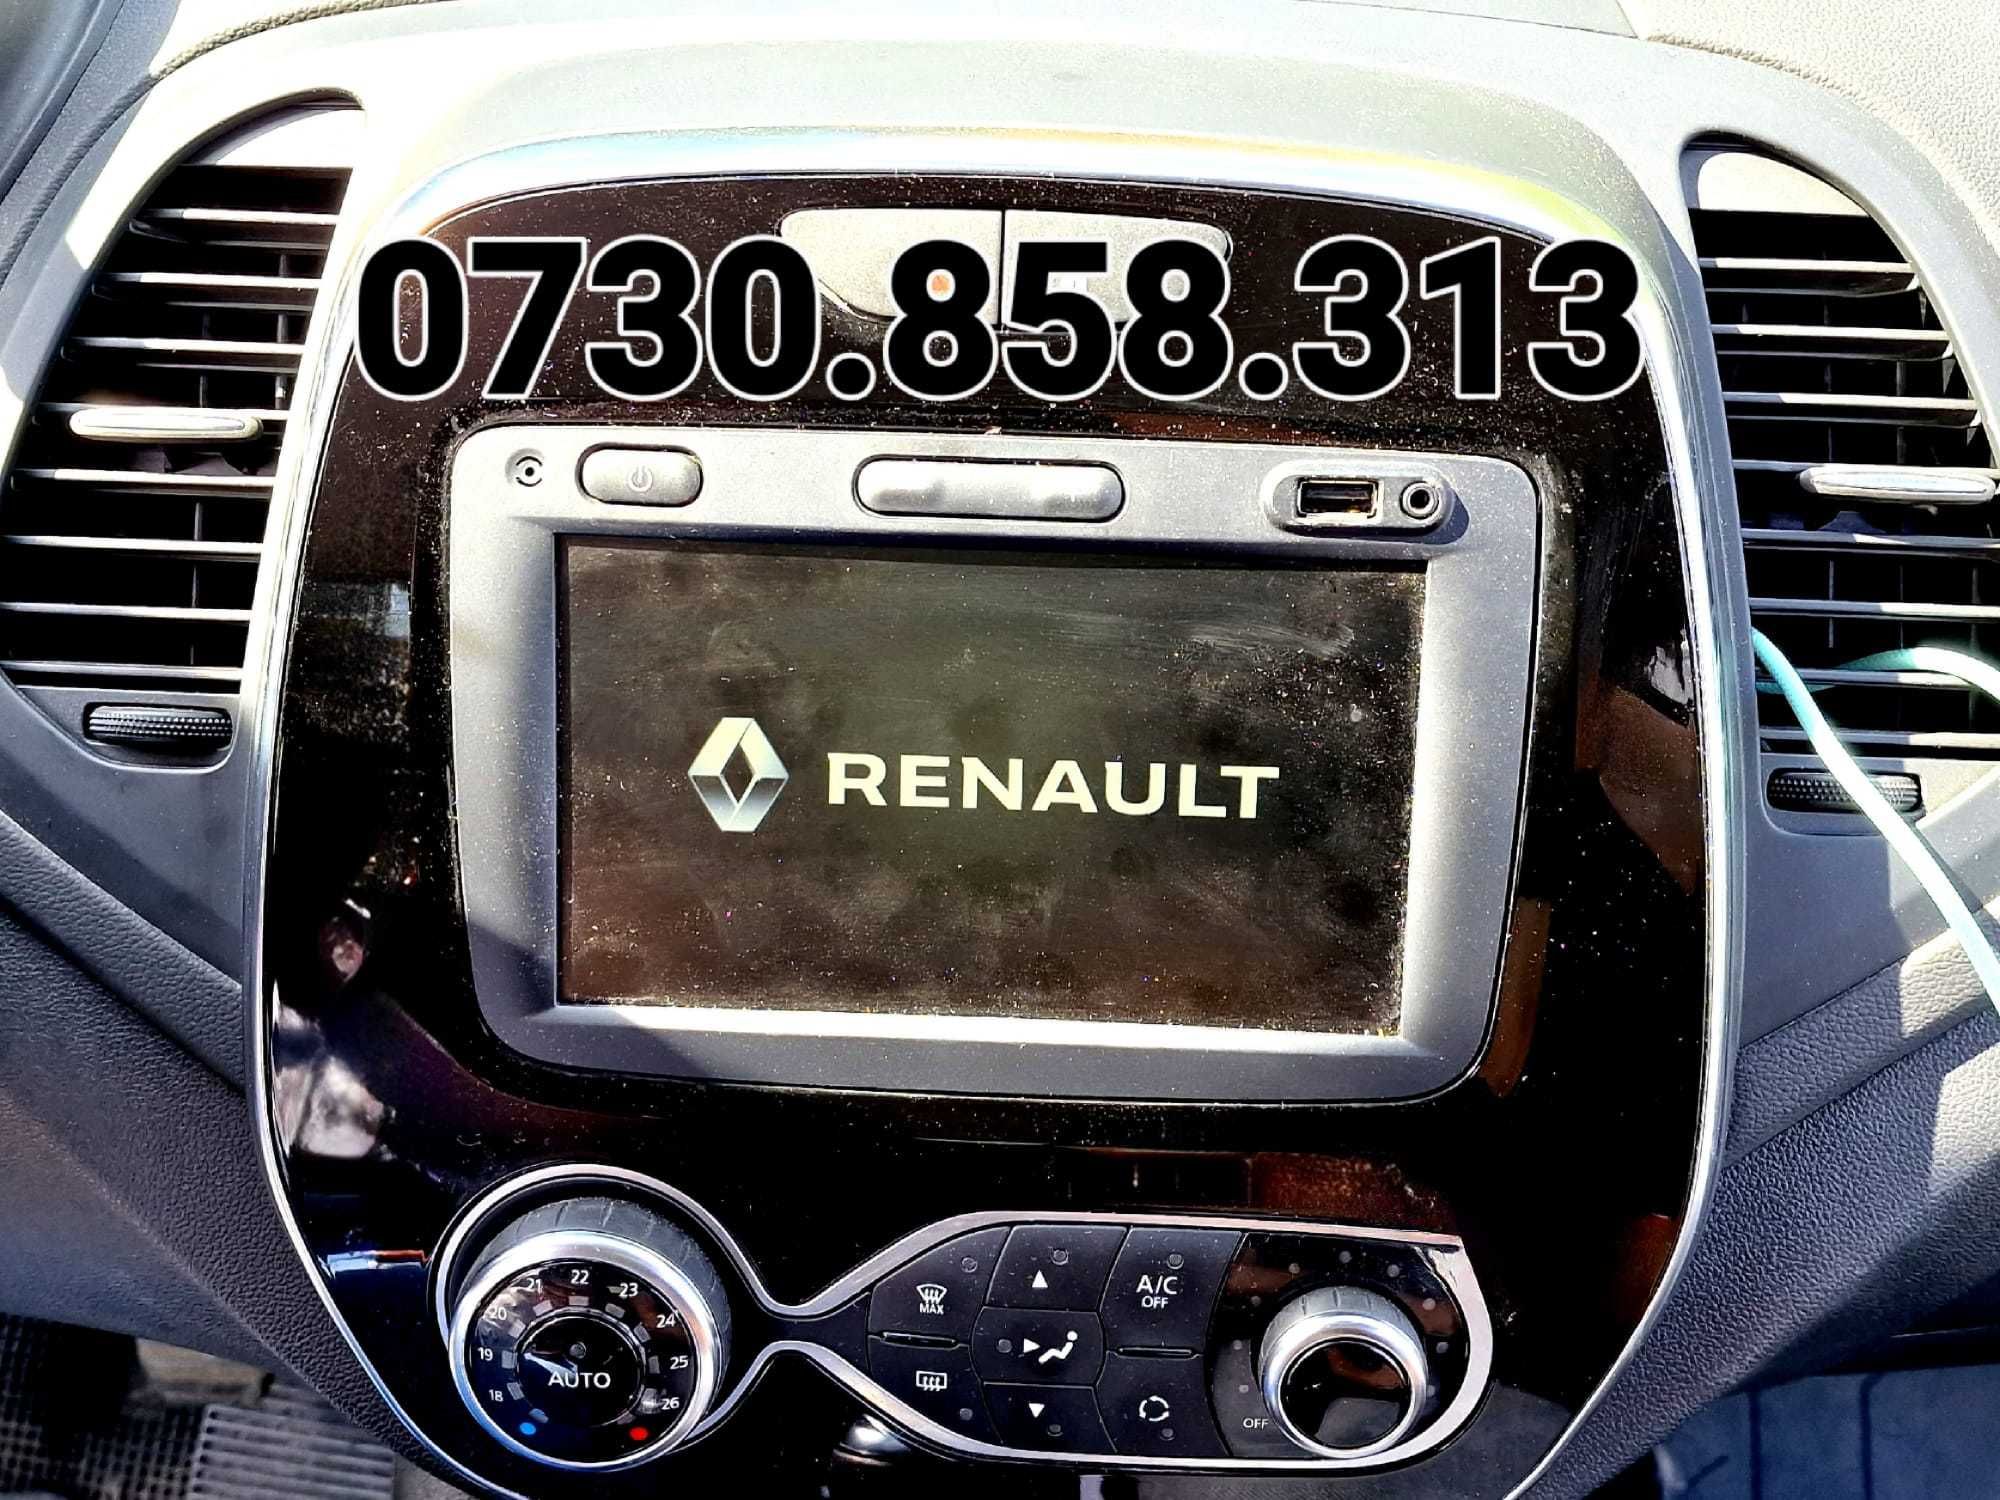 Harta Captur Renault Media Nav Clio 4 Harta TURCIA + Europa full